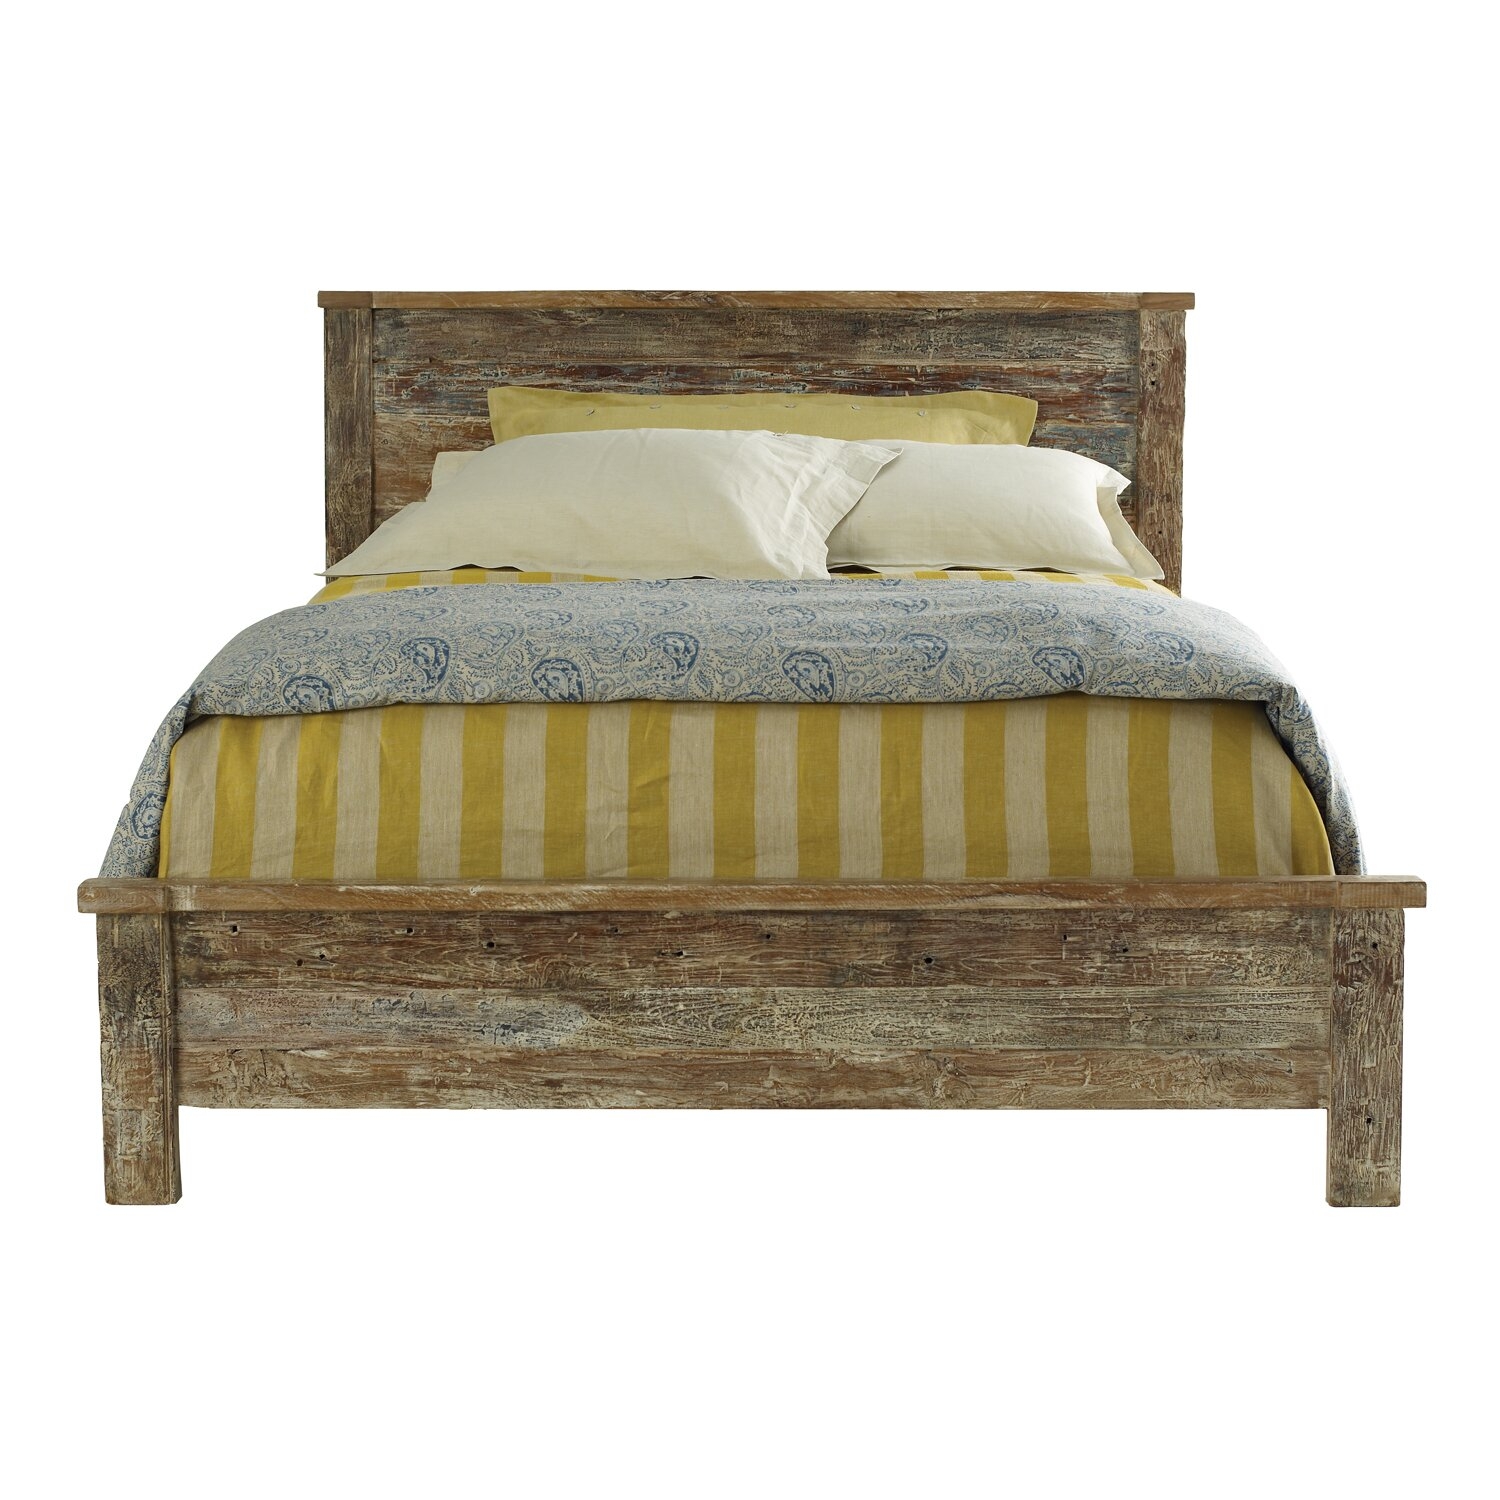 Distressed wood bedroom sets 15